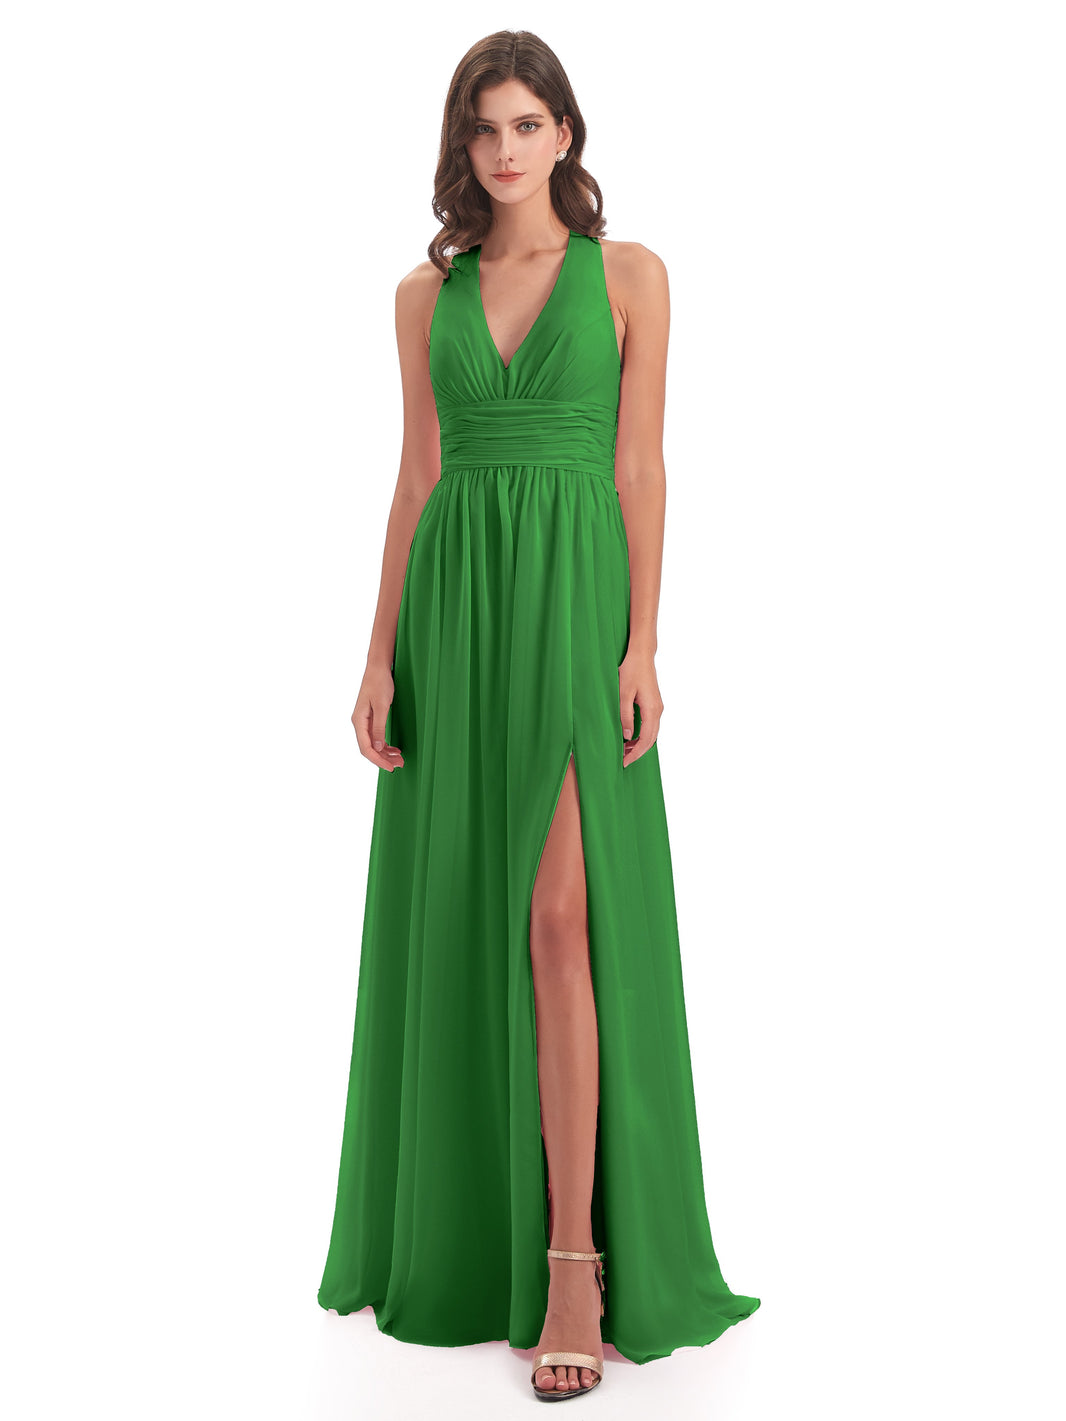 Green Bridesmaid Dresses Bring You a Self-renewal | Cicinia